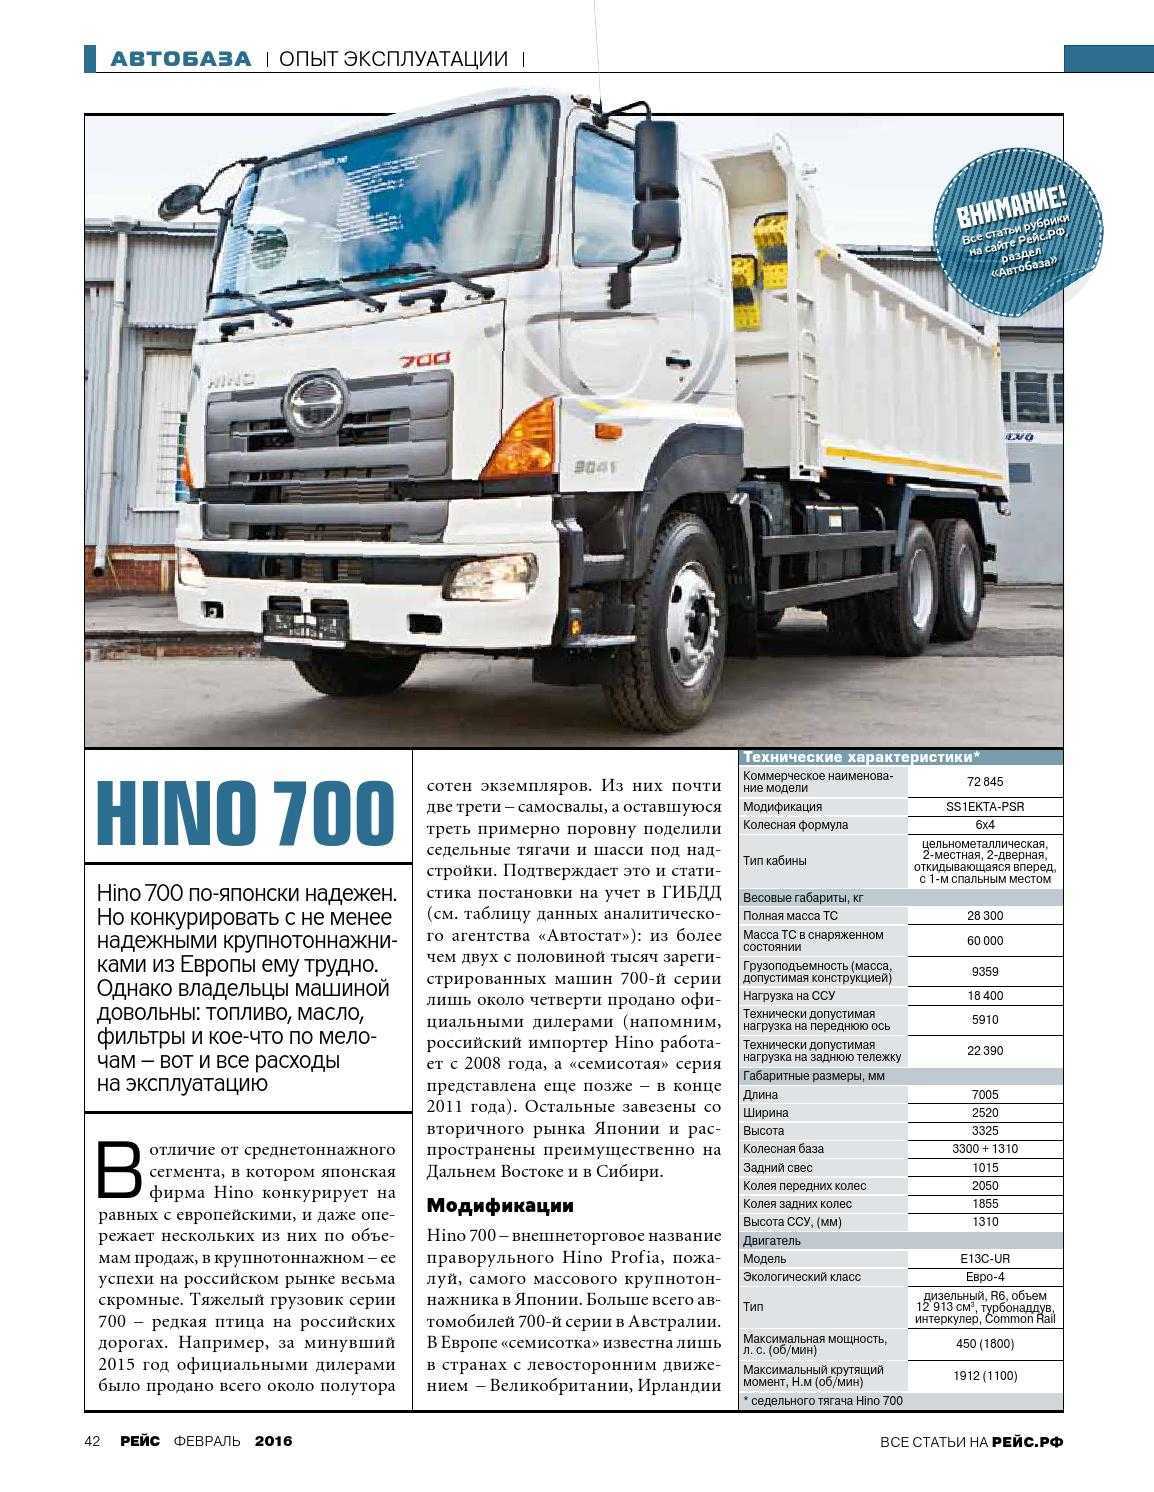 Hino-700: технические характеристики